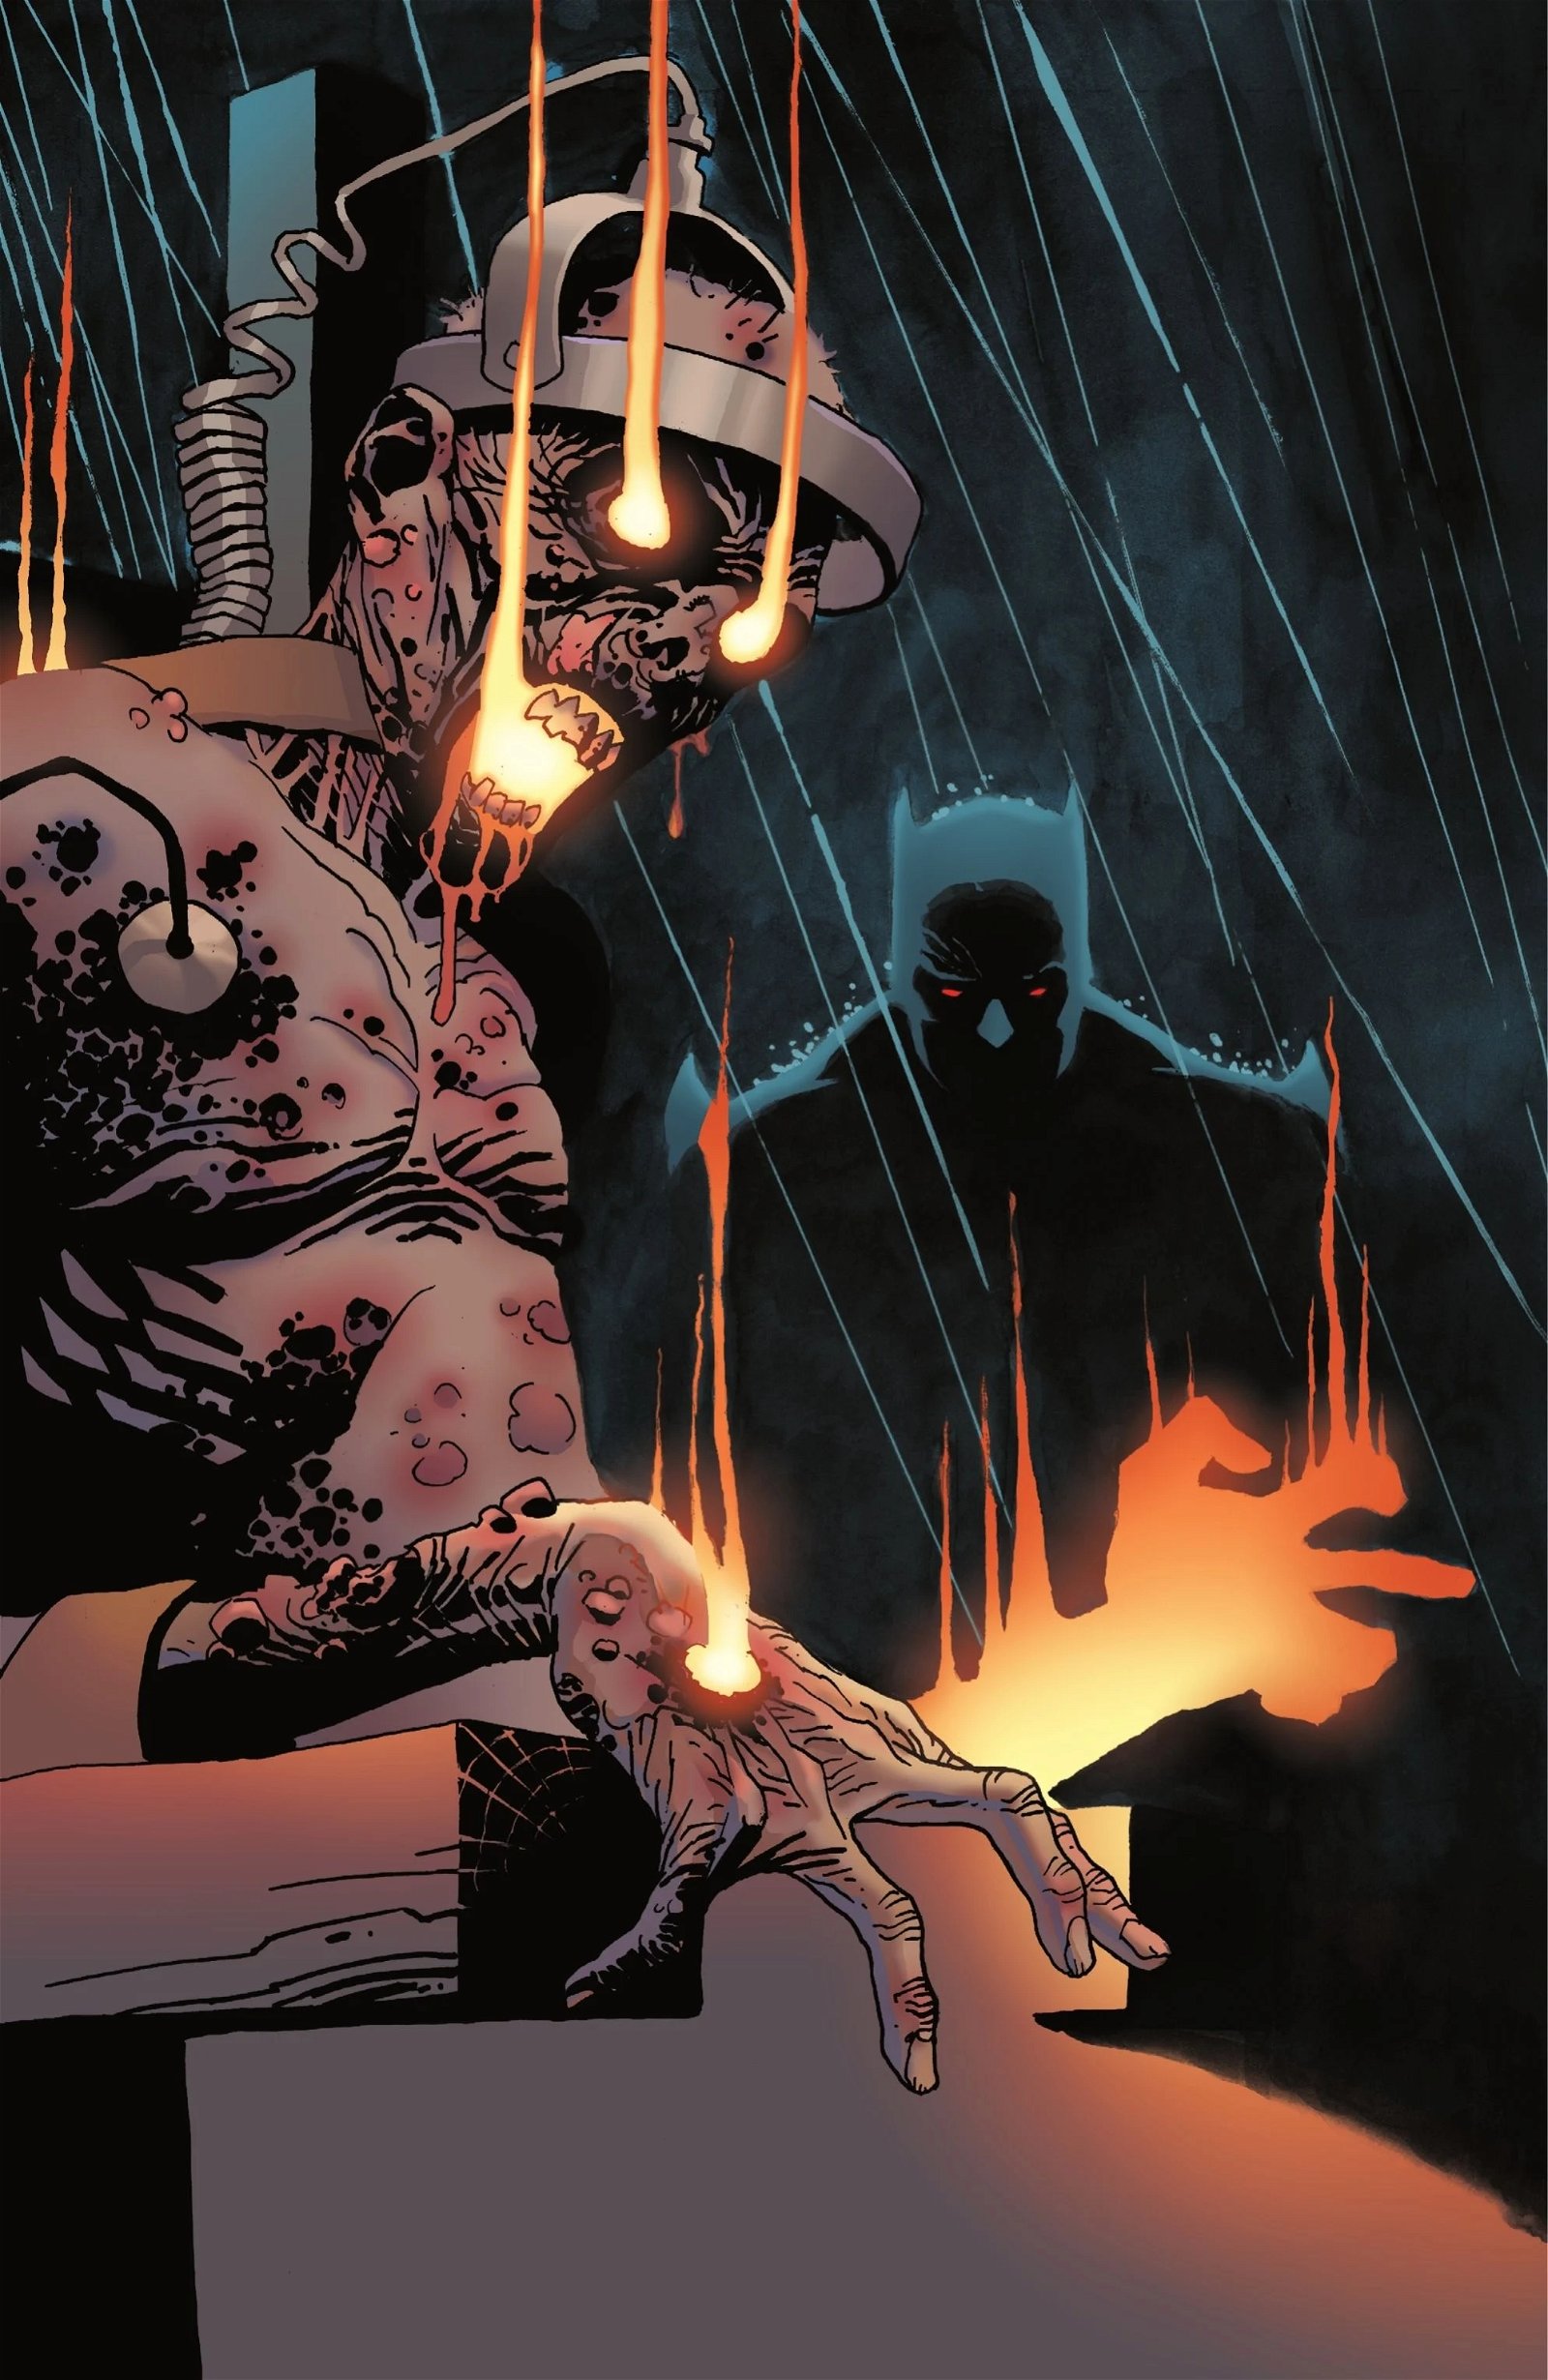 The Flashpoint version of Batman returns in a big way killing a DC hero